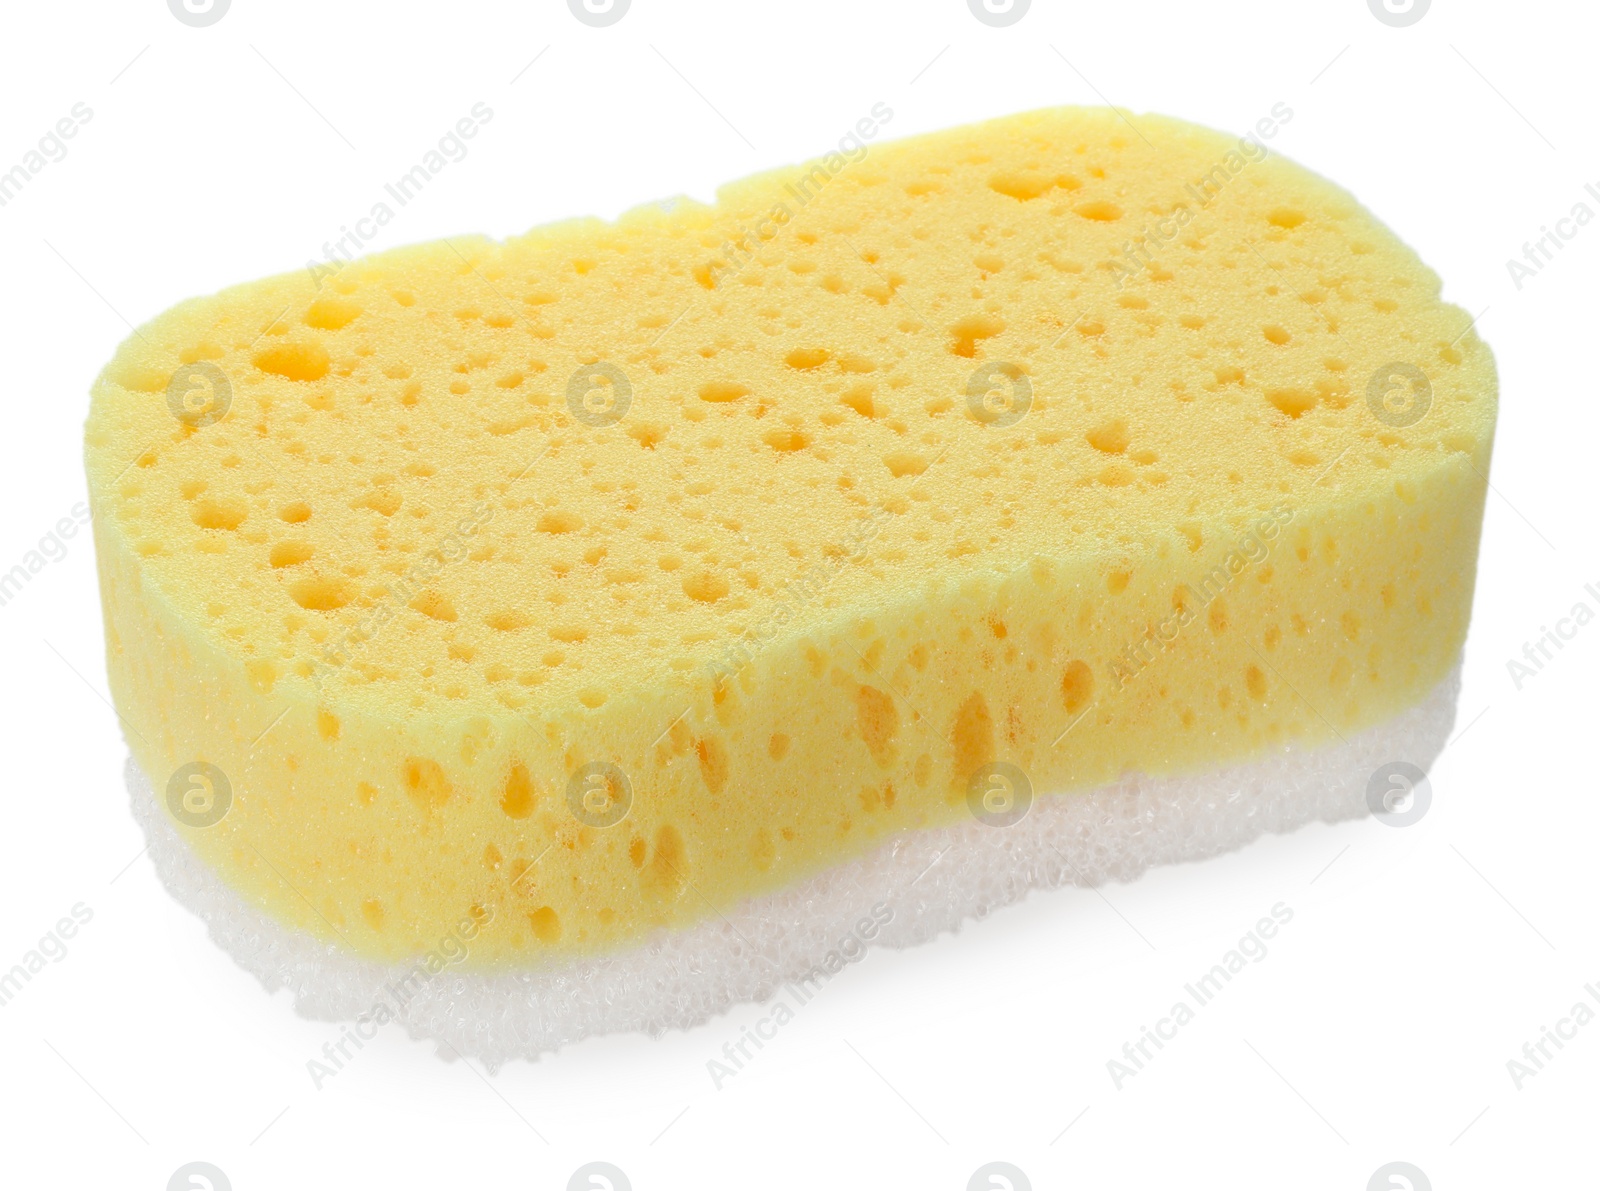 Photo of One new yellow sponge isolated on white